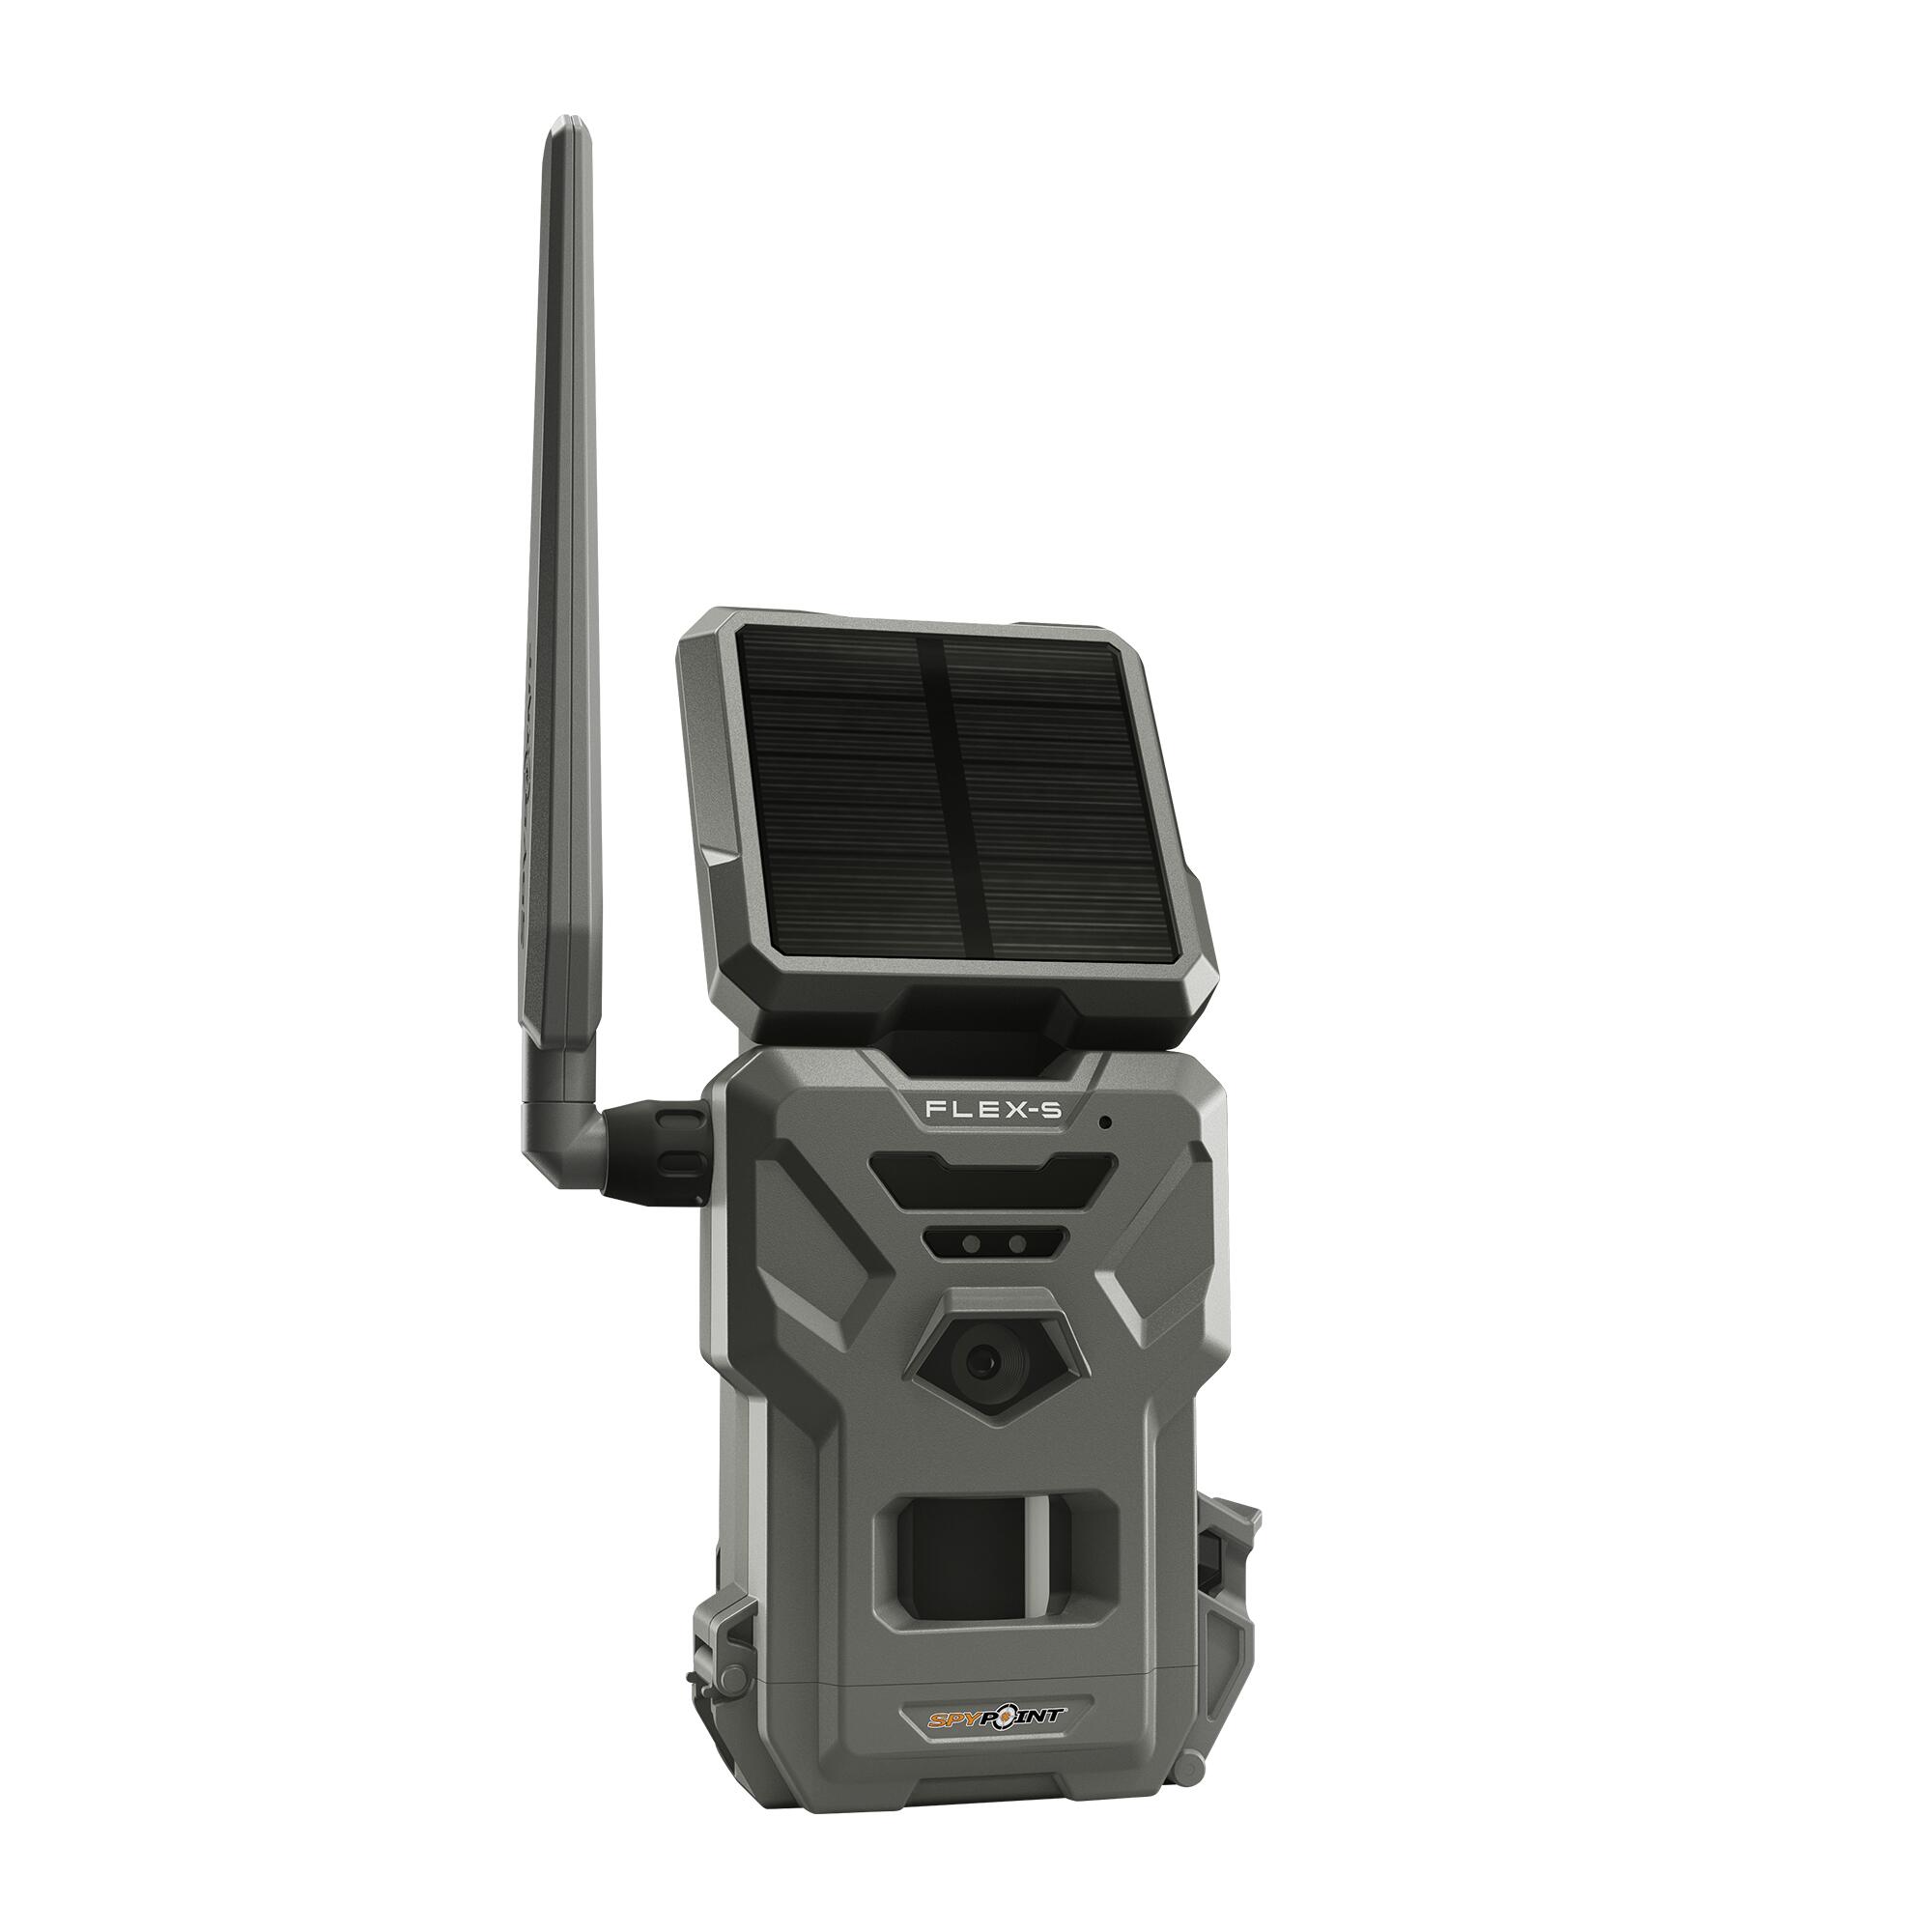 Cellular solar trail camera Spypoint FLEX-S 2/7